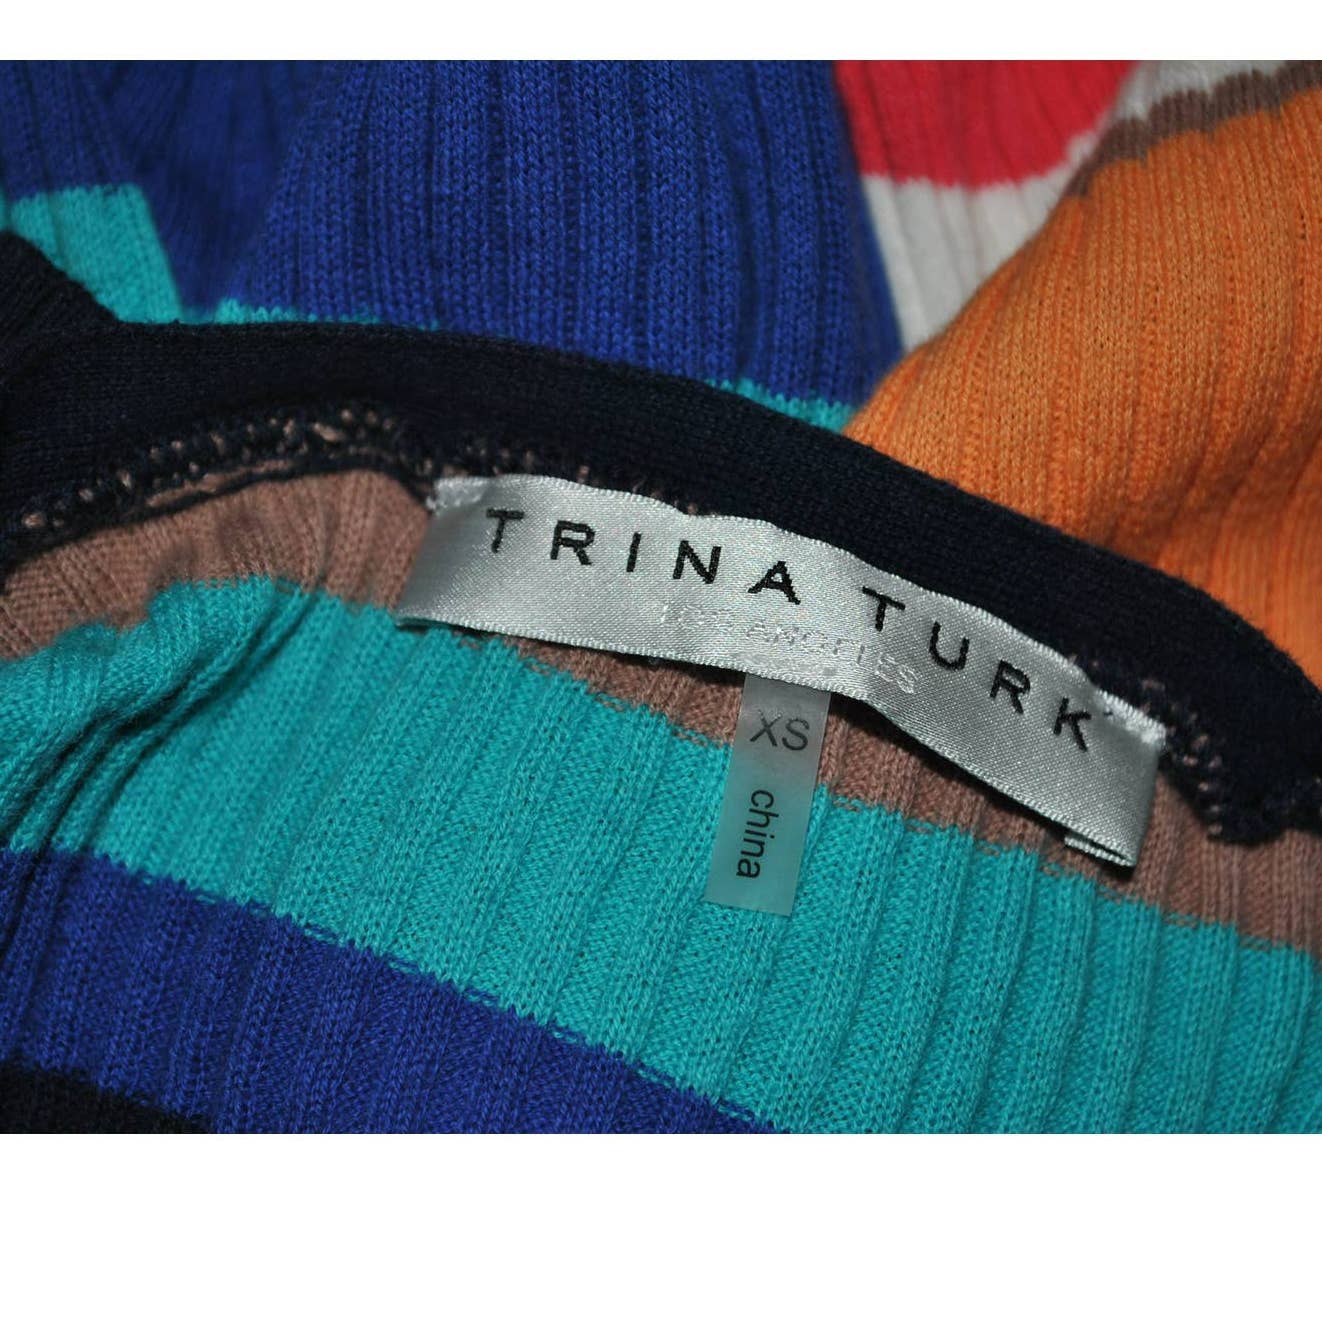 Trina Turk Multi-colored Striped Ribbed Top - XS